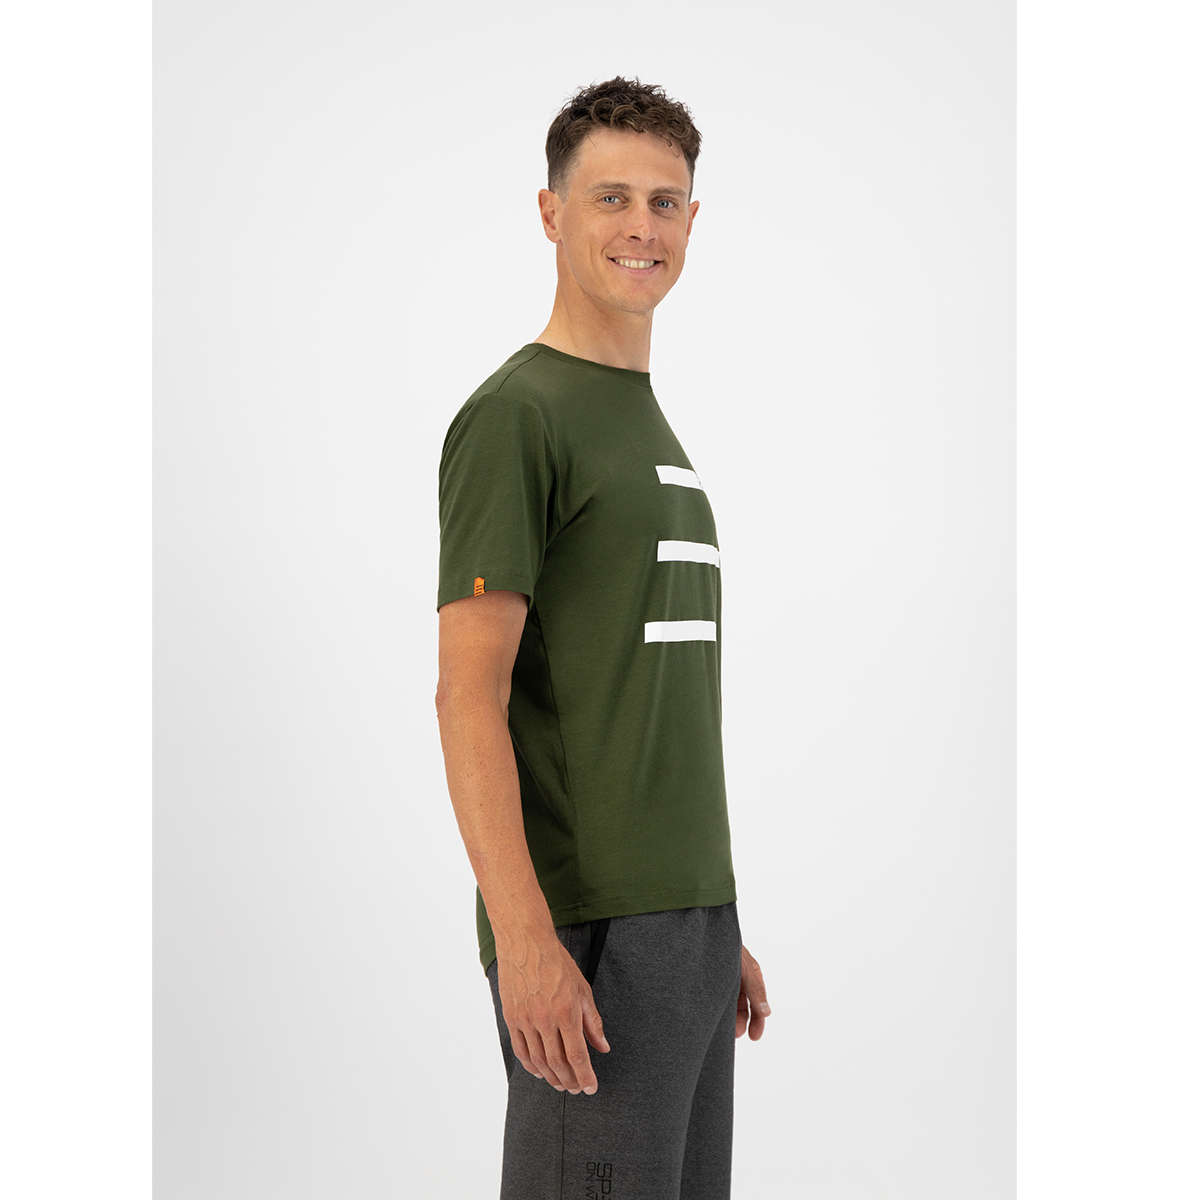 FUTURUM T-Shirt SPEED ON WHEELS "E" Green